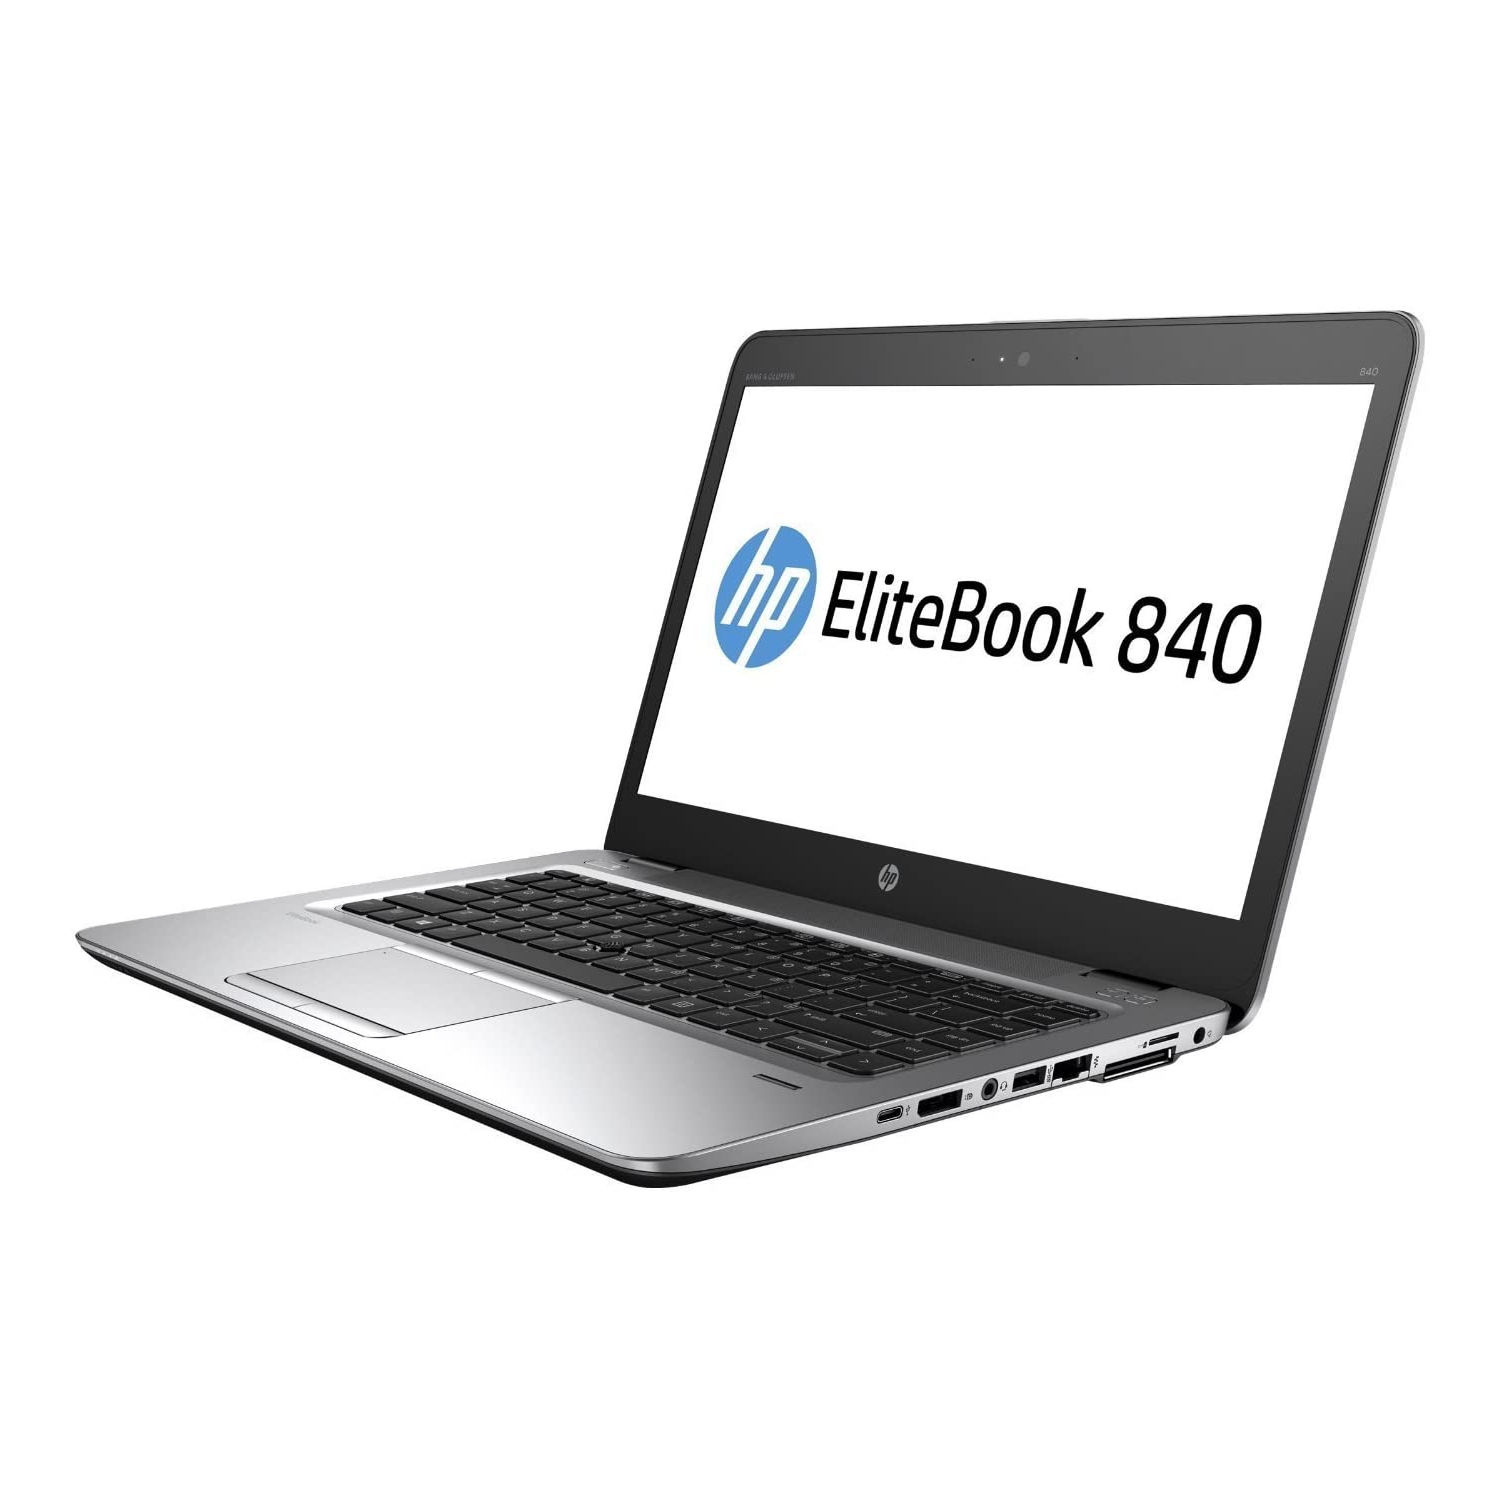 Refurbished (Good) - HP EliteBook 840 G3 14" Business Laptop - Intel Core i7-6600U, 16GB RAM, 512 GB ( M.2 SSD, SUPER FAST ), Webcam - Windows 10 Pro-